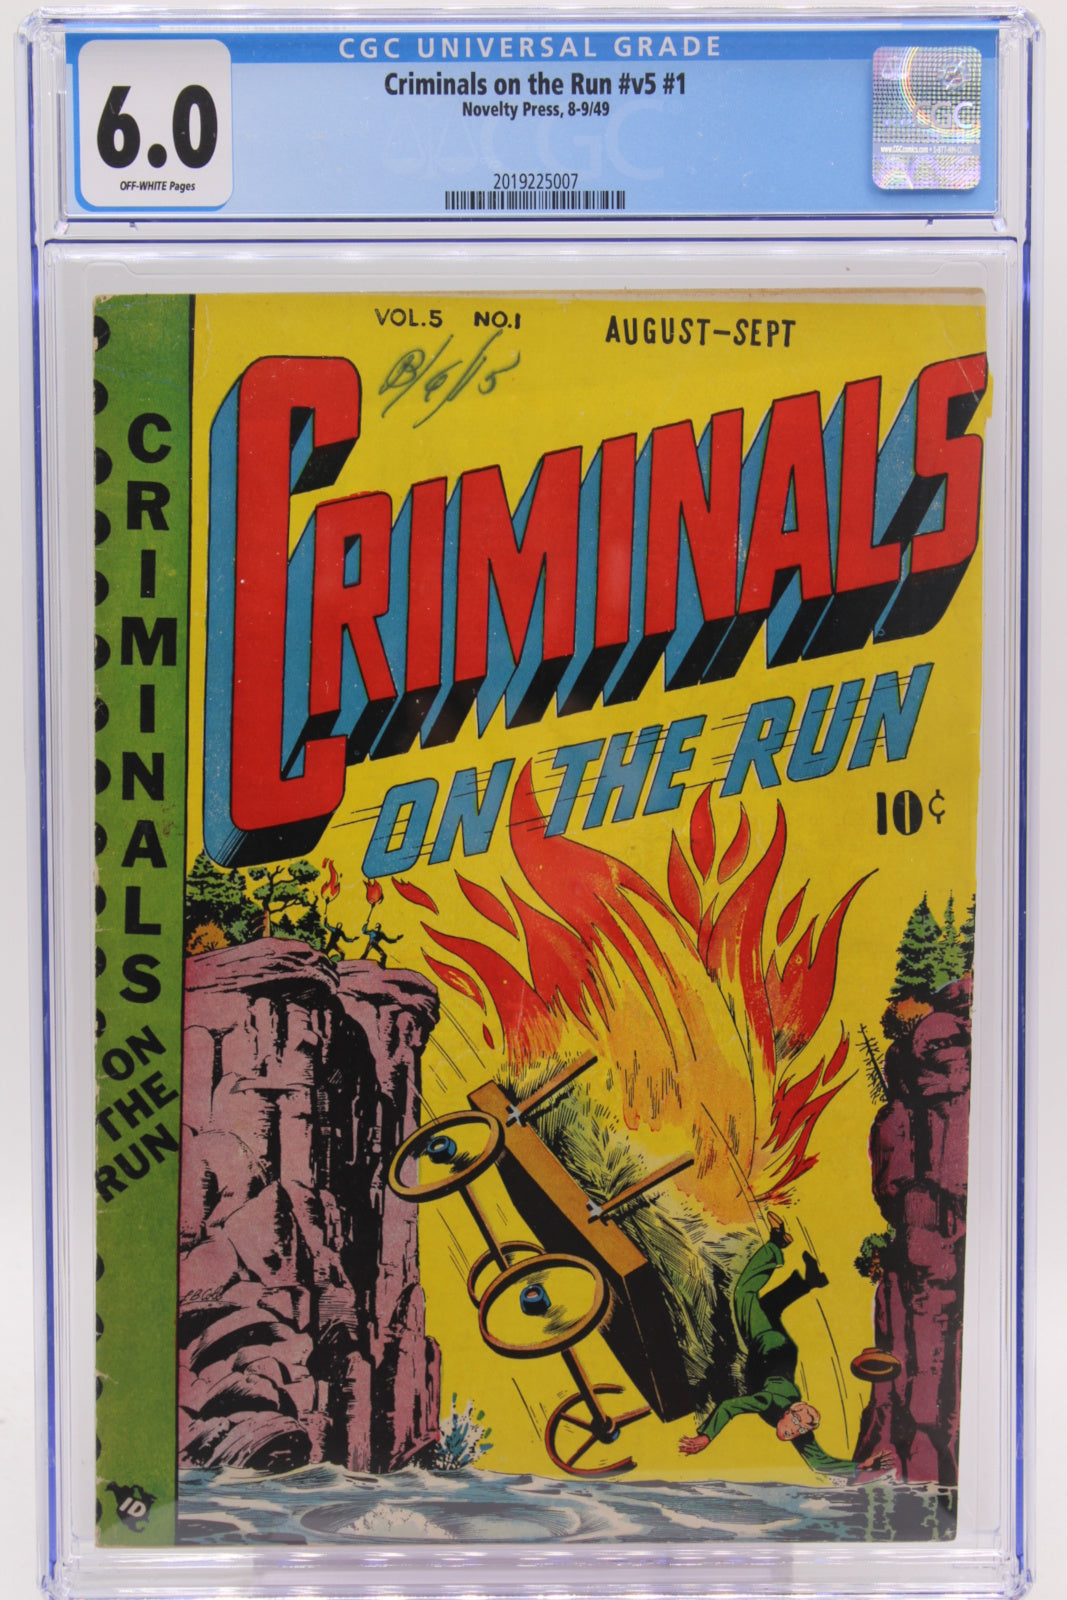 Criminals on the Run #v5 #1 CGC 6.0, Golden Age Crime Comic